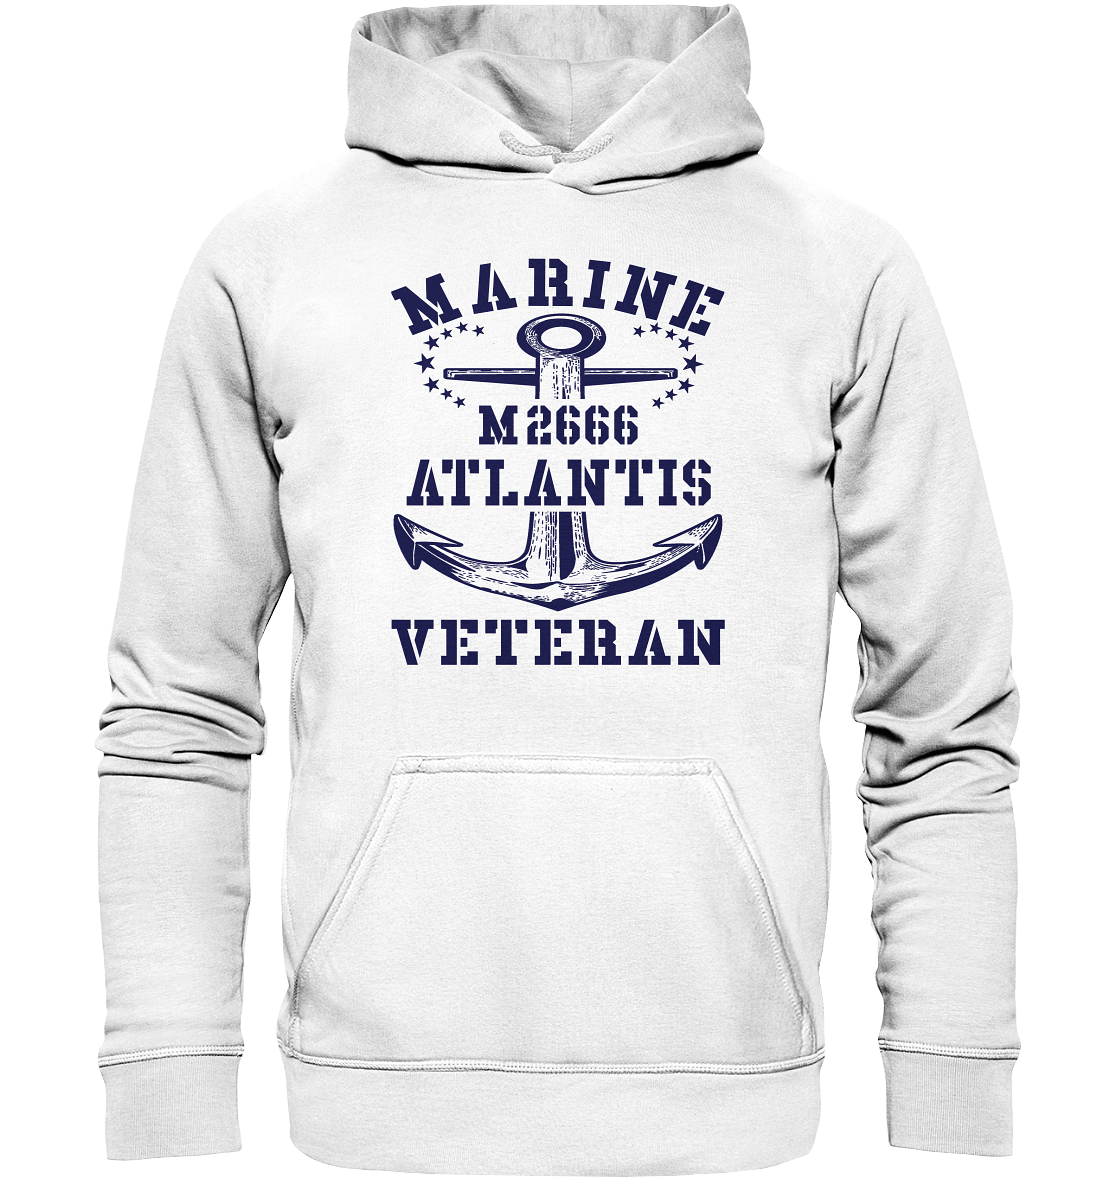 BiMi M2666 ATLANTIS Marine Veteran - Basic Unisex Hoodie